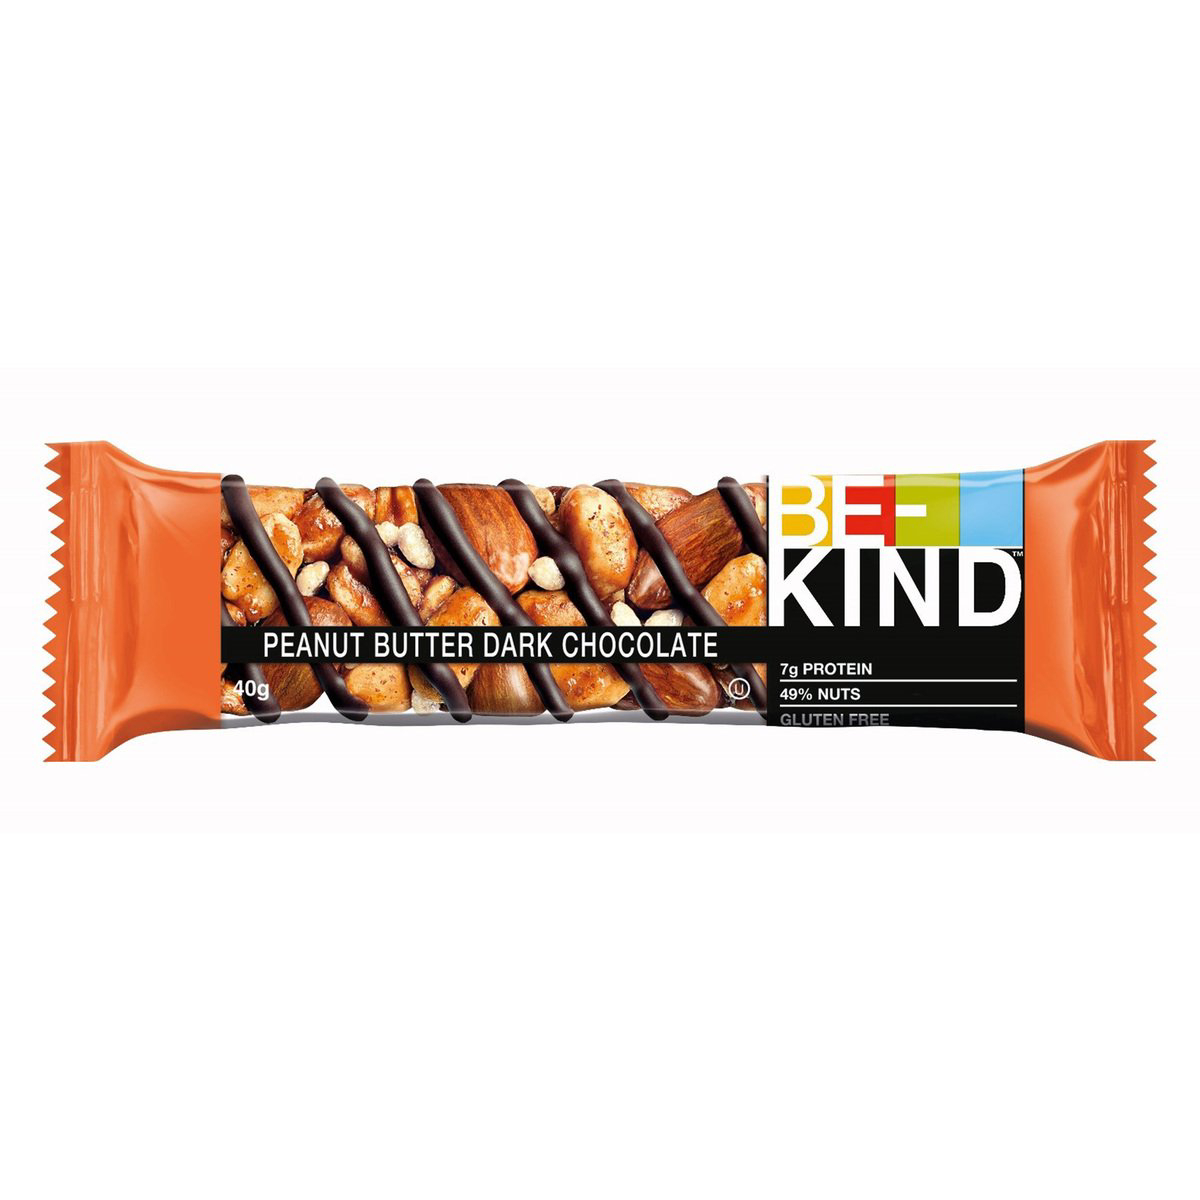 Be-Kind Dark Peanut Butter Dark Chocolate Bar 12 x 40 g